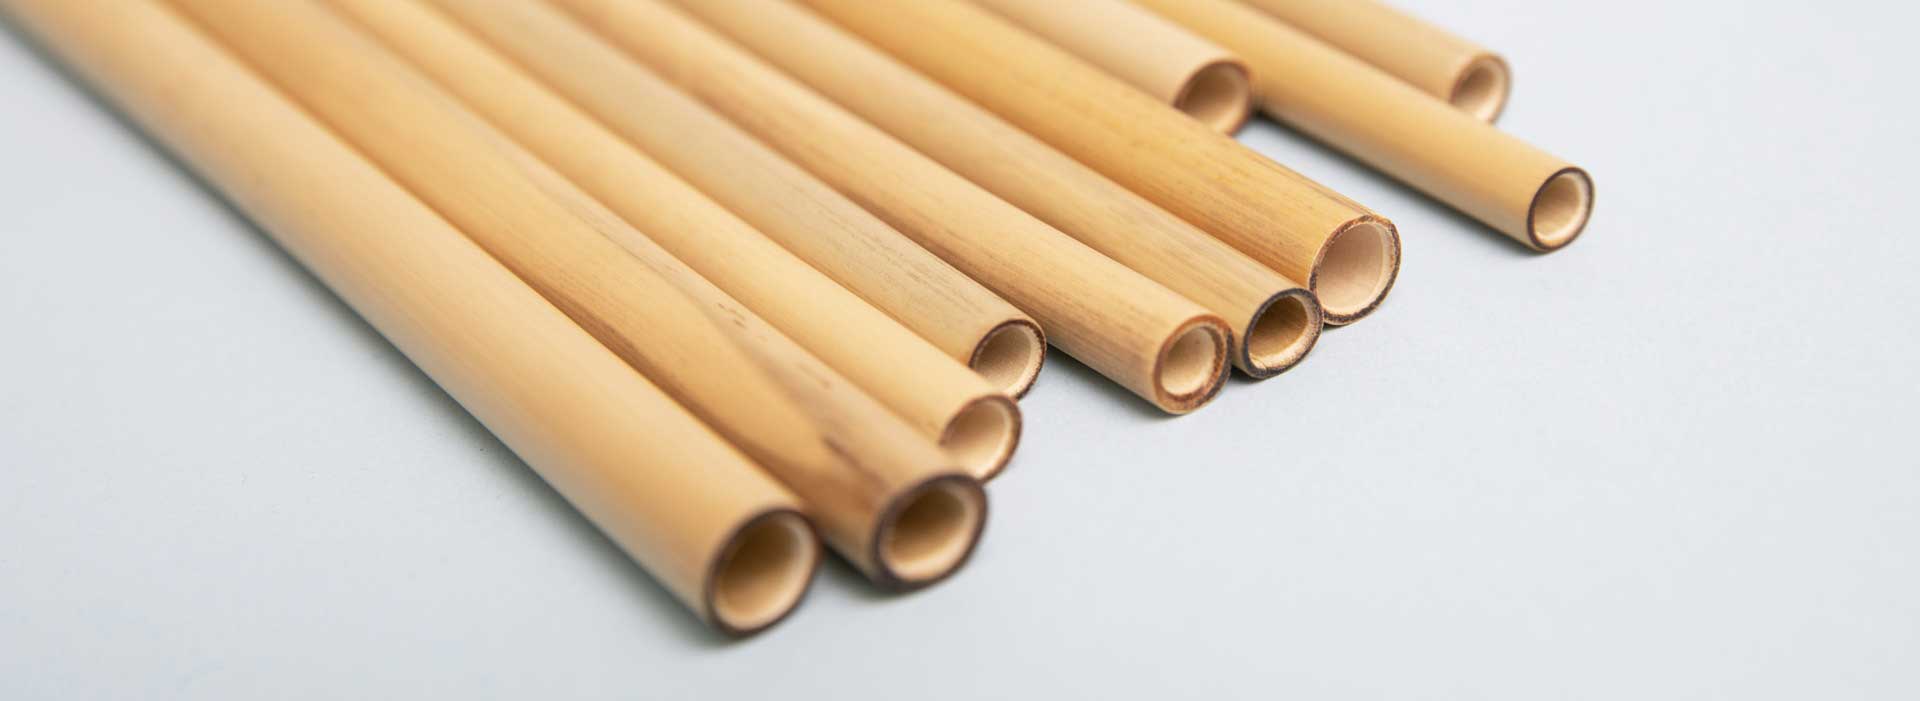 Mehrere Bambus-Strohhalme als giftige Strohhalm-Alternative.